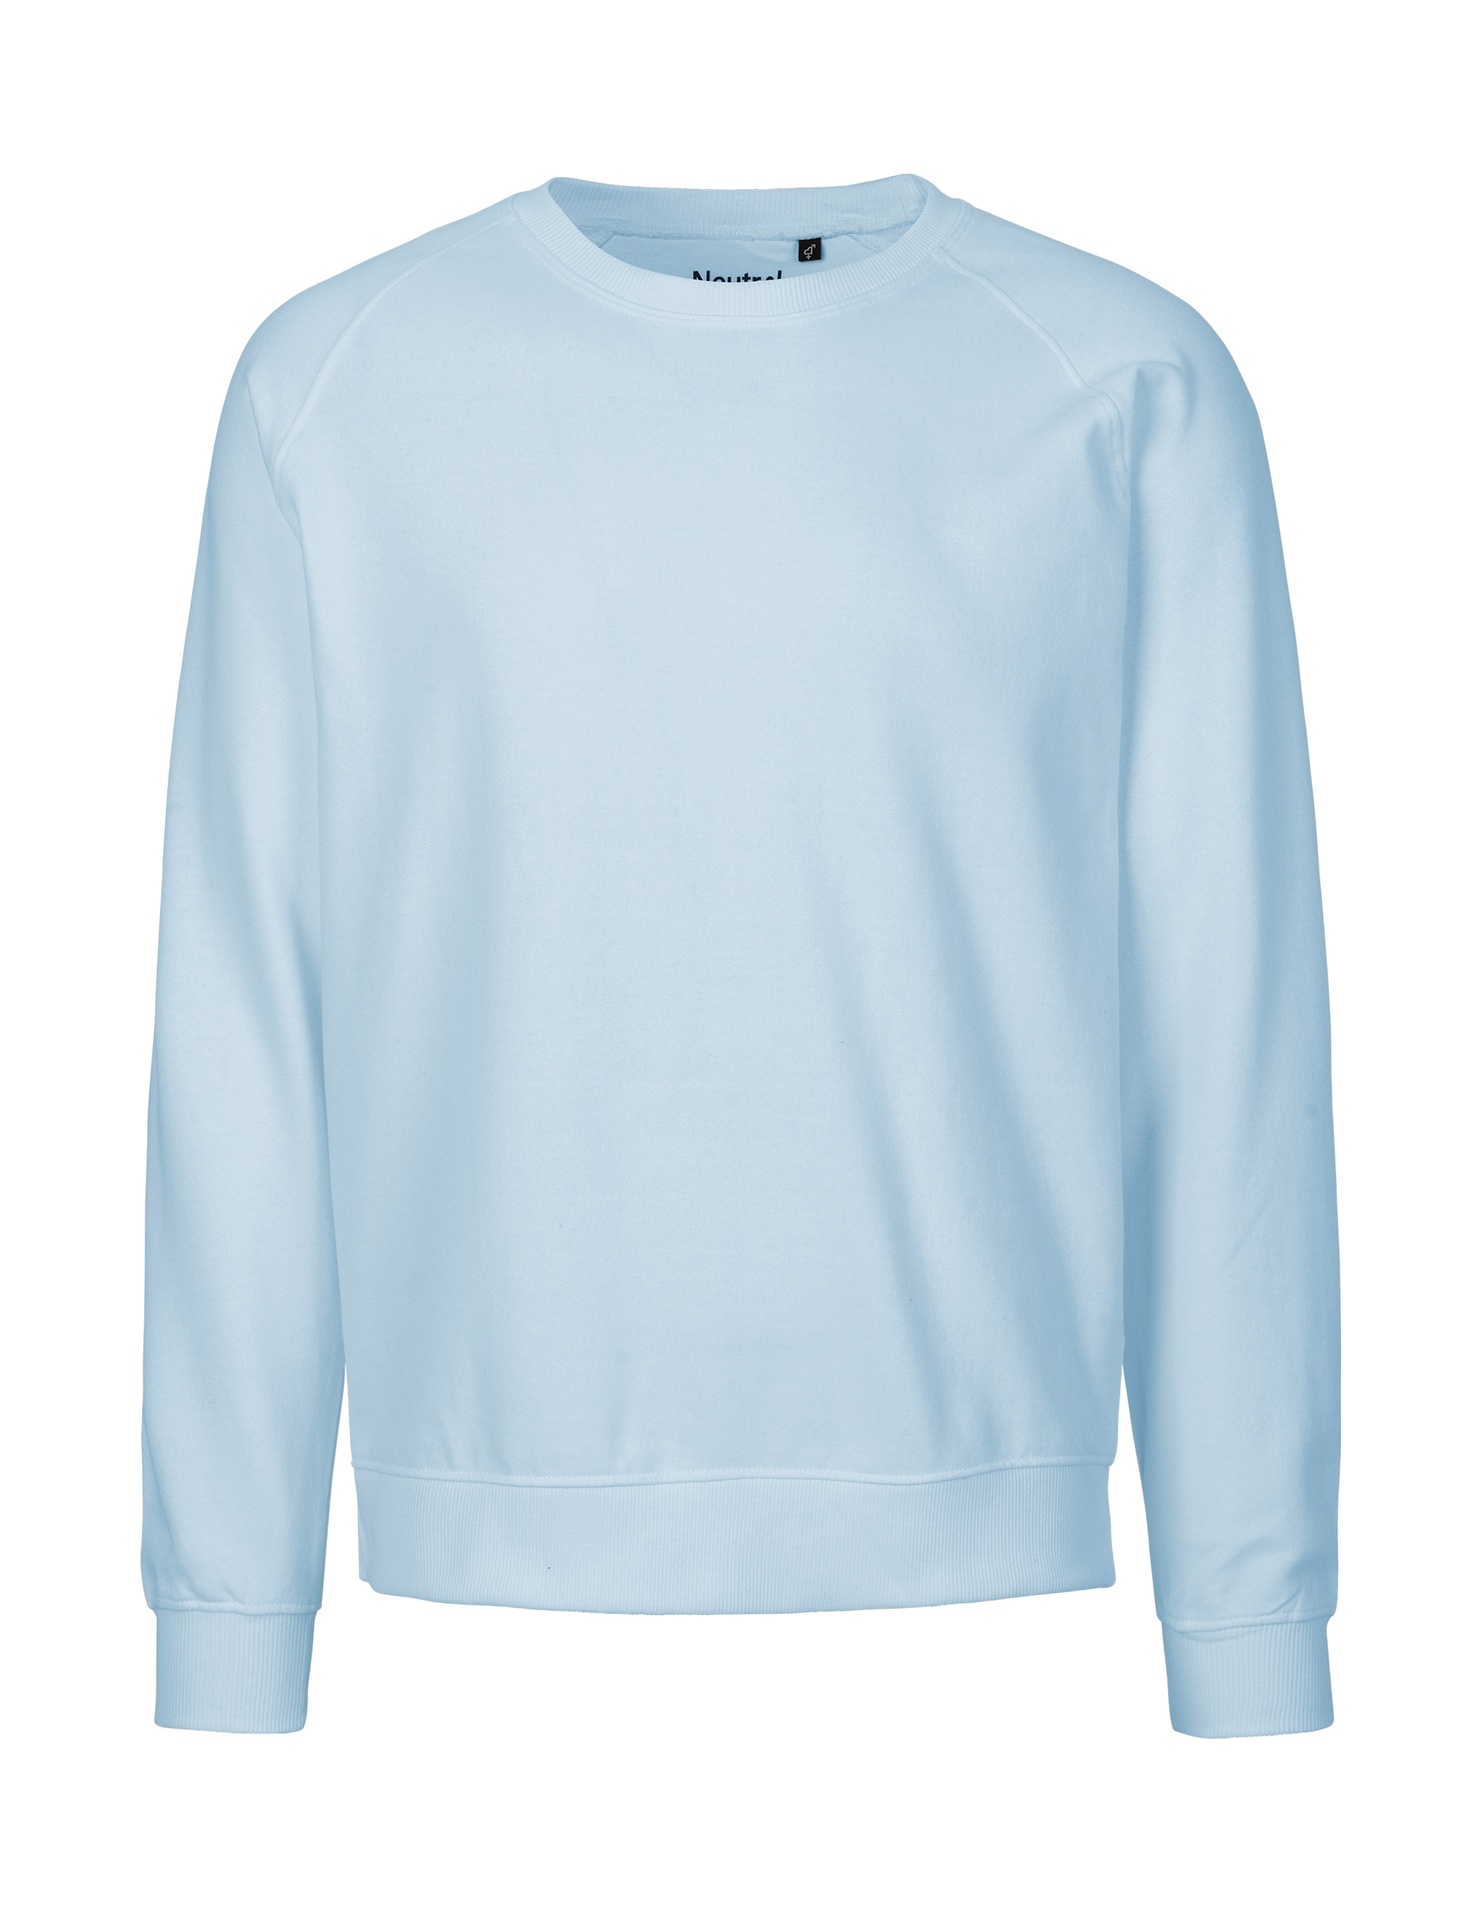 [PR/02889] Unisex Sweatshirt (Light Blue 69, L)